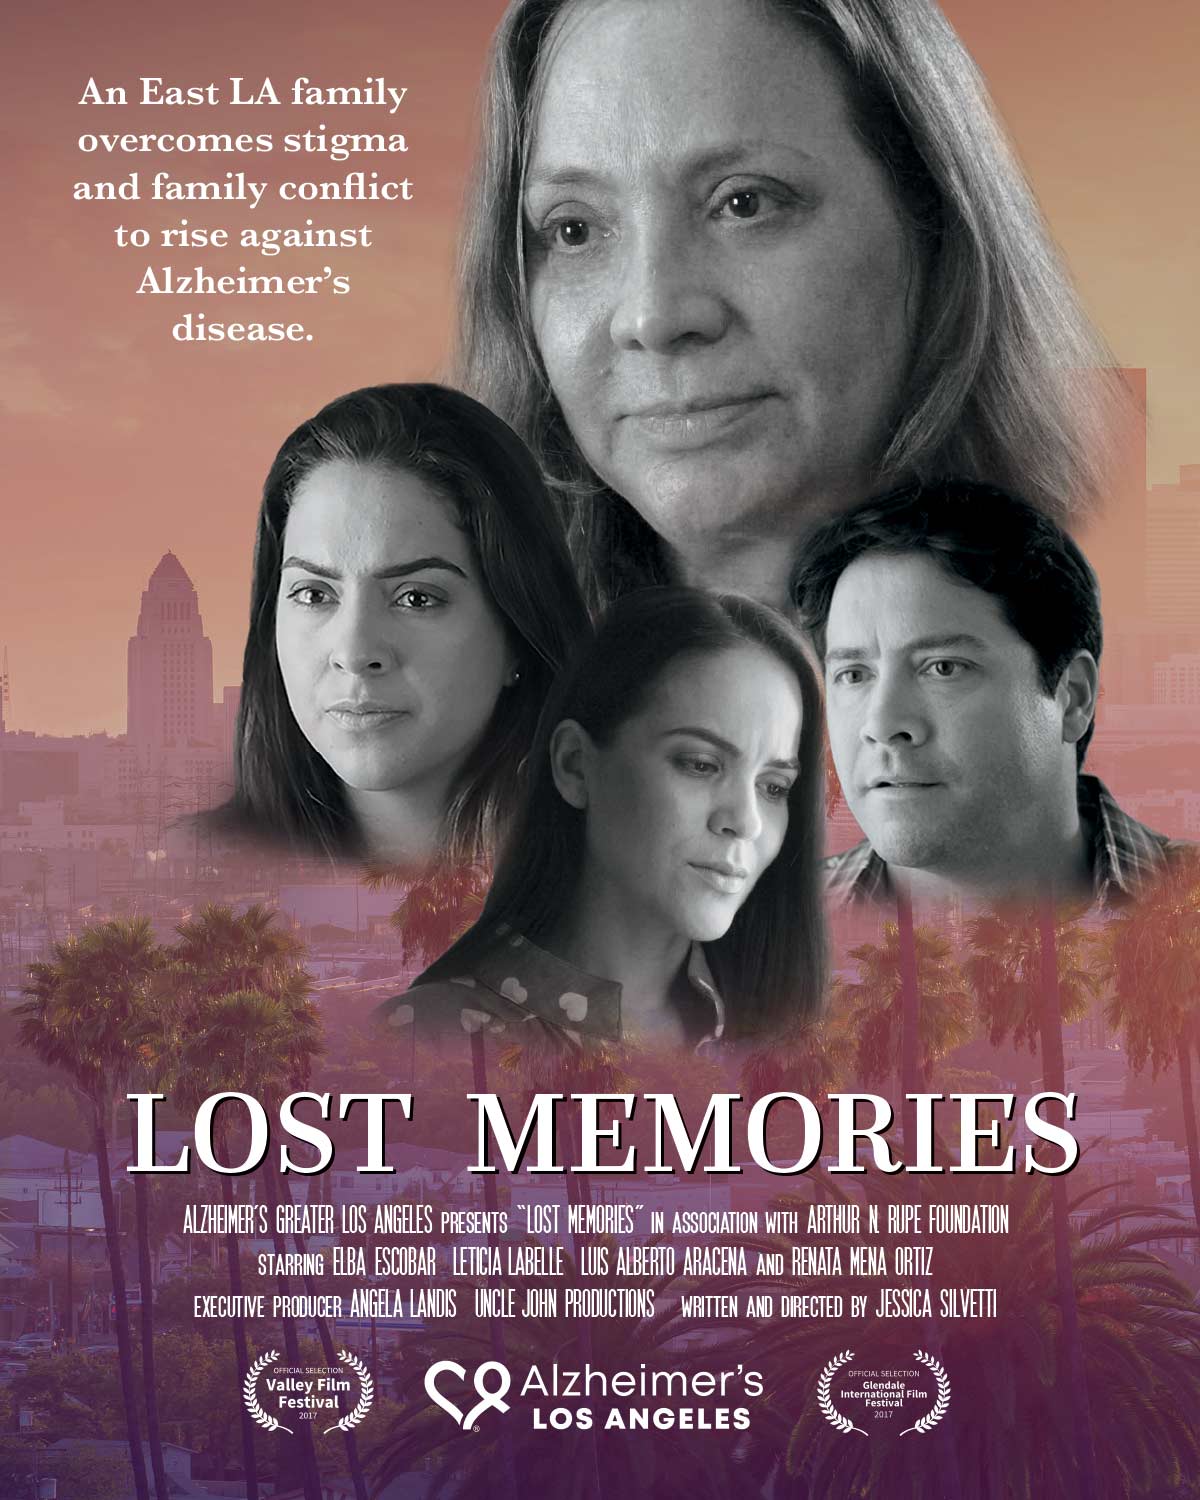 main characters from telenovela - Alzheimer's Los Angeles